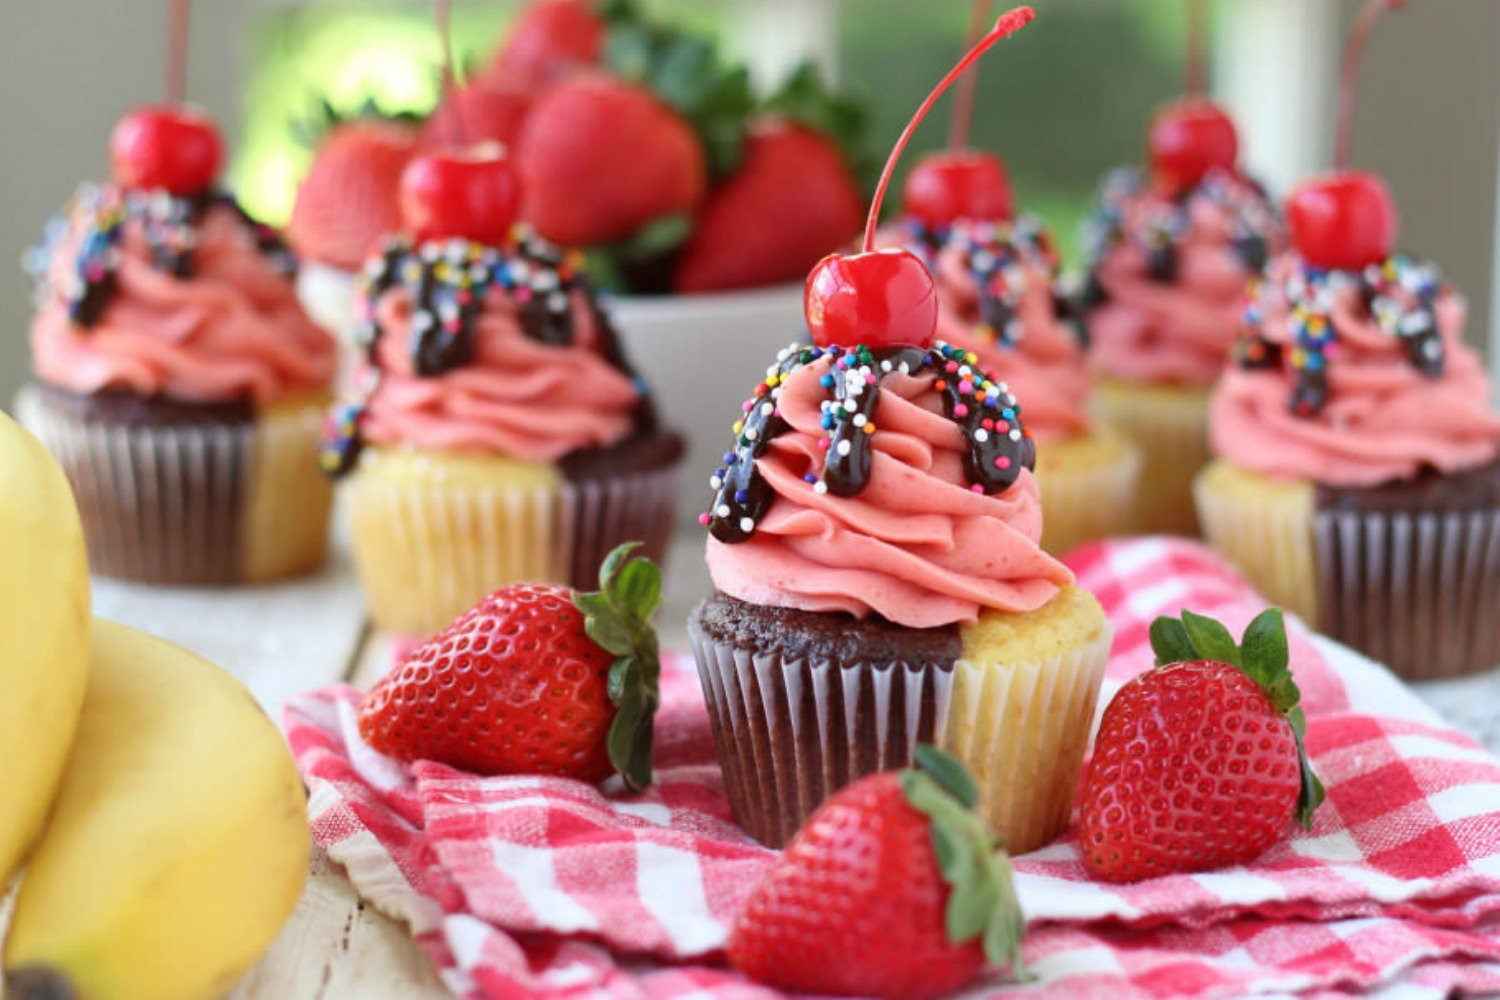 Summer Cupcakes Recipe the Best 15 Summer Cupcake Recipes